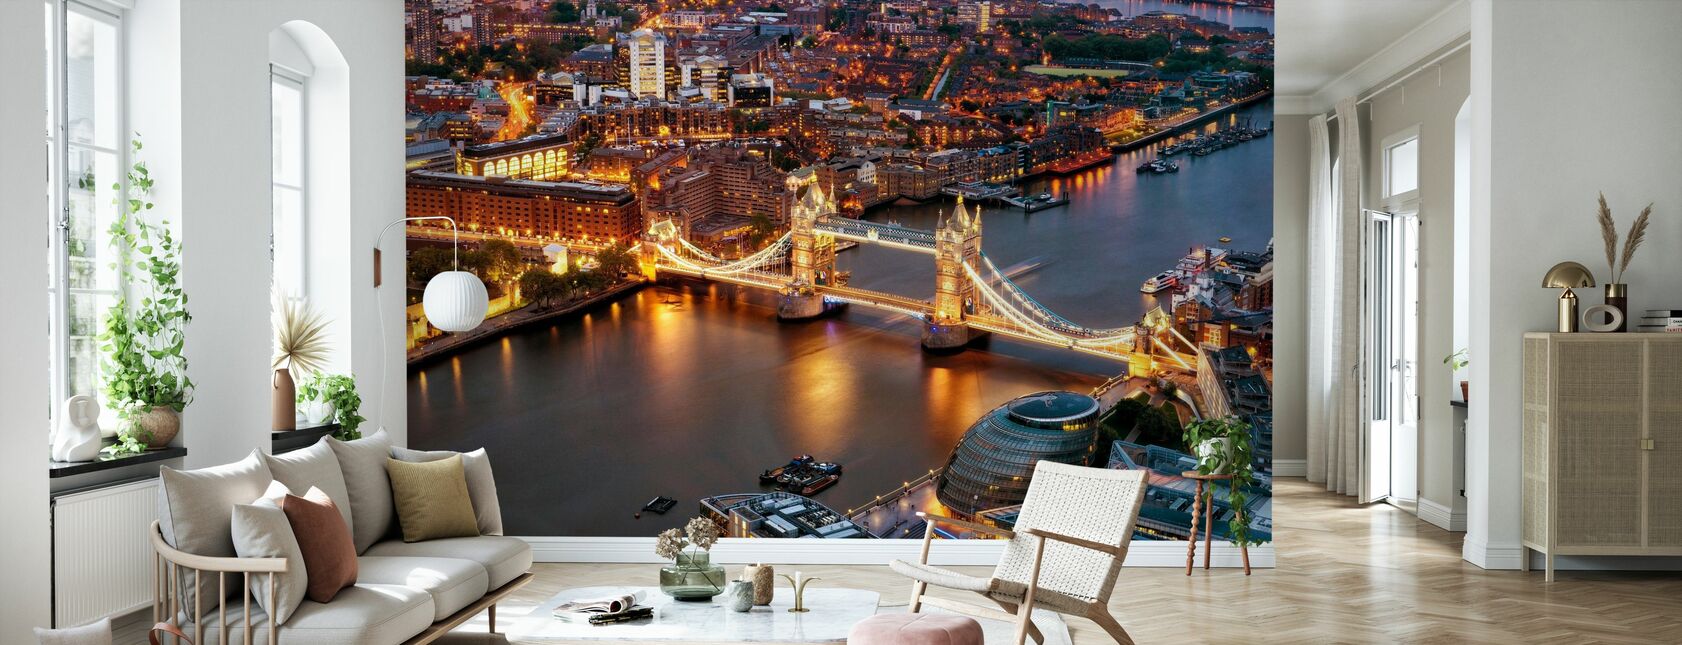 London Tower Bridge - Wallpaper - Living Room